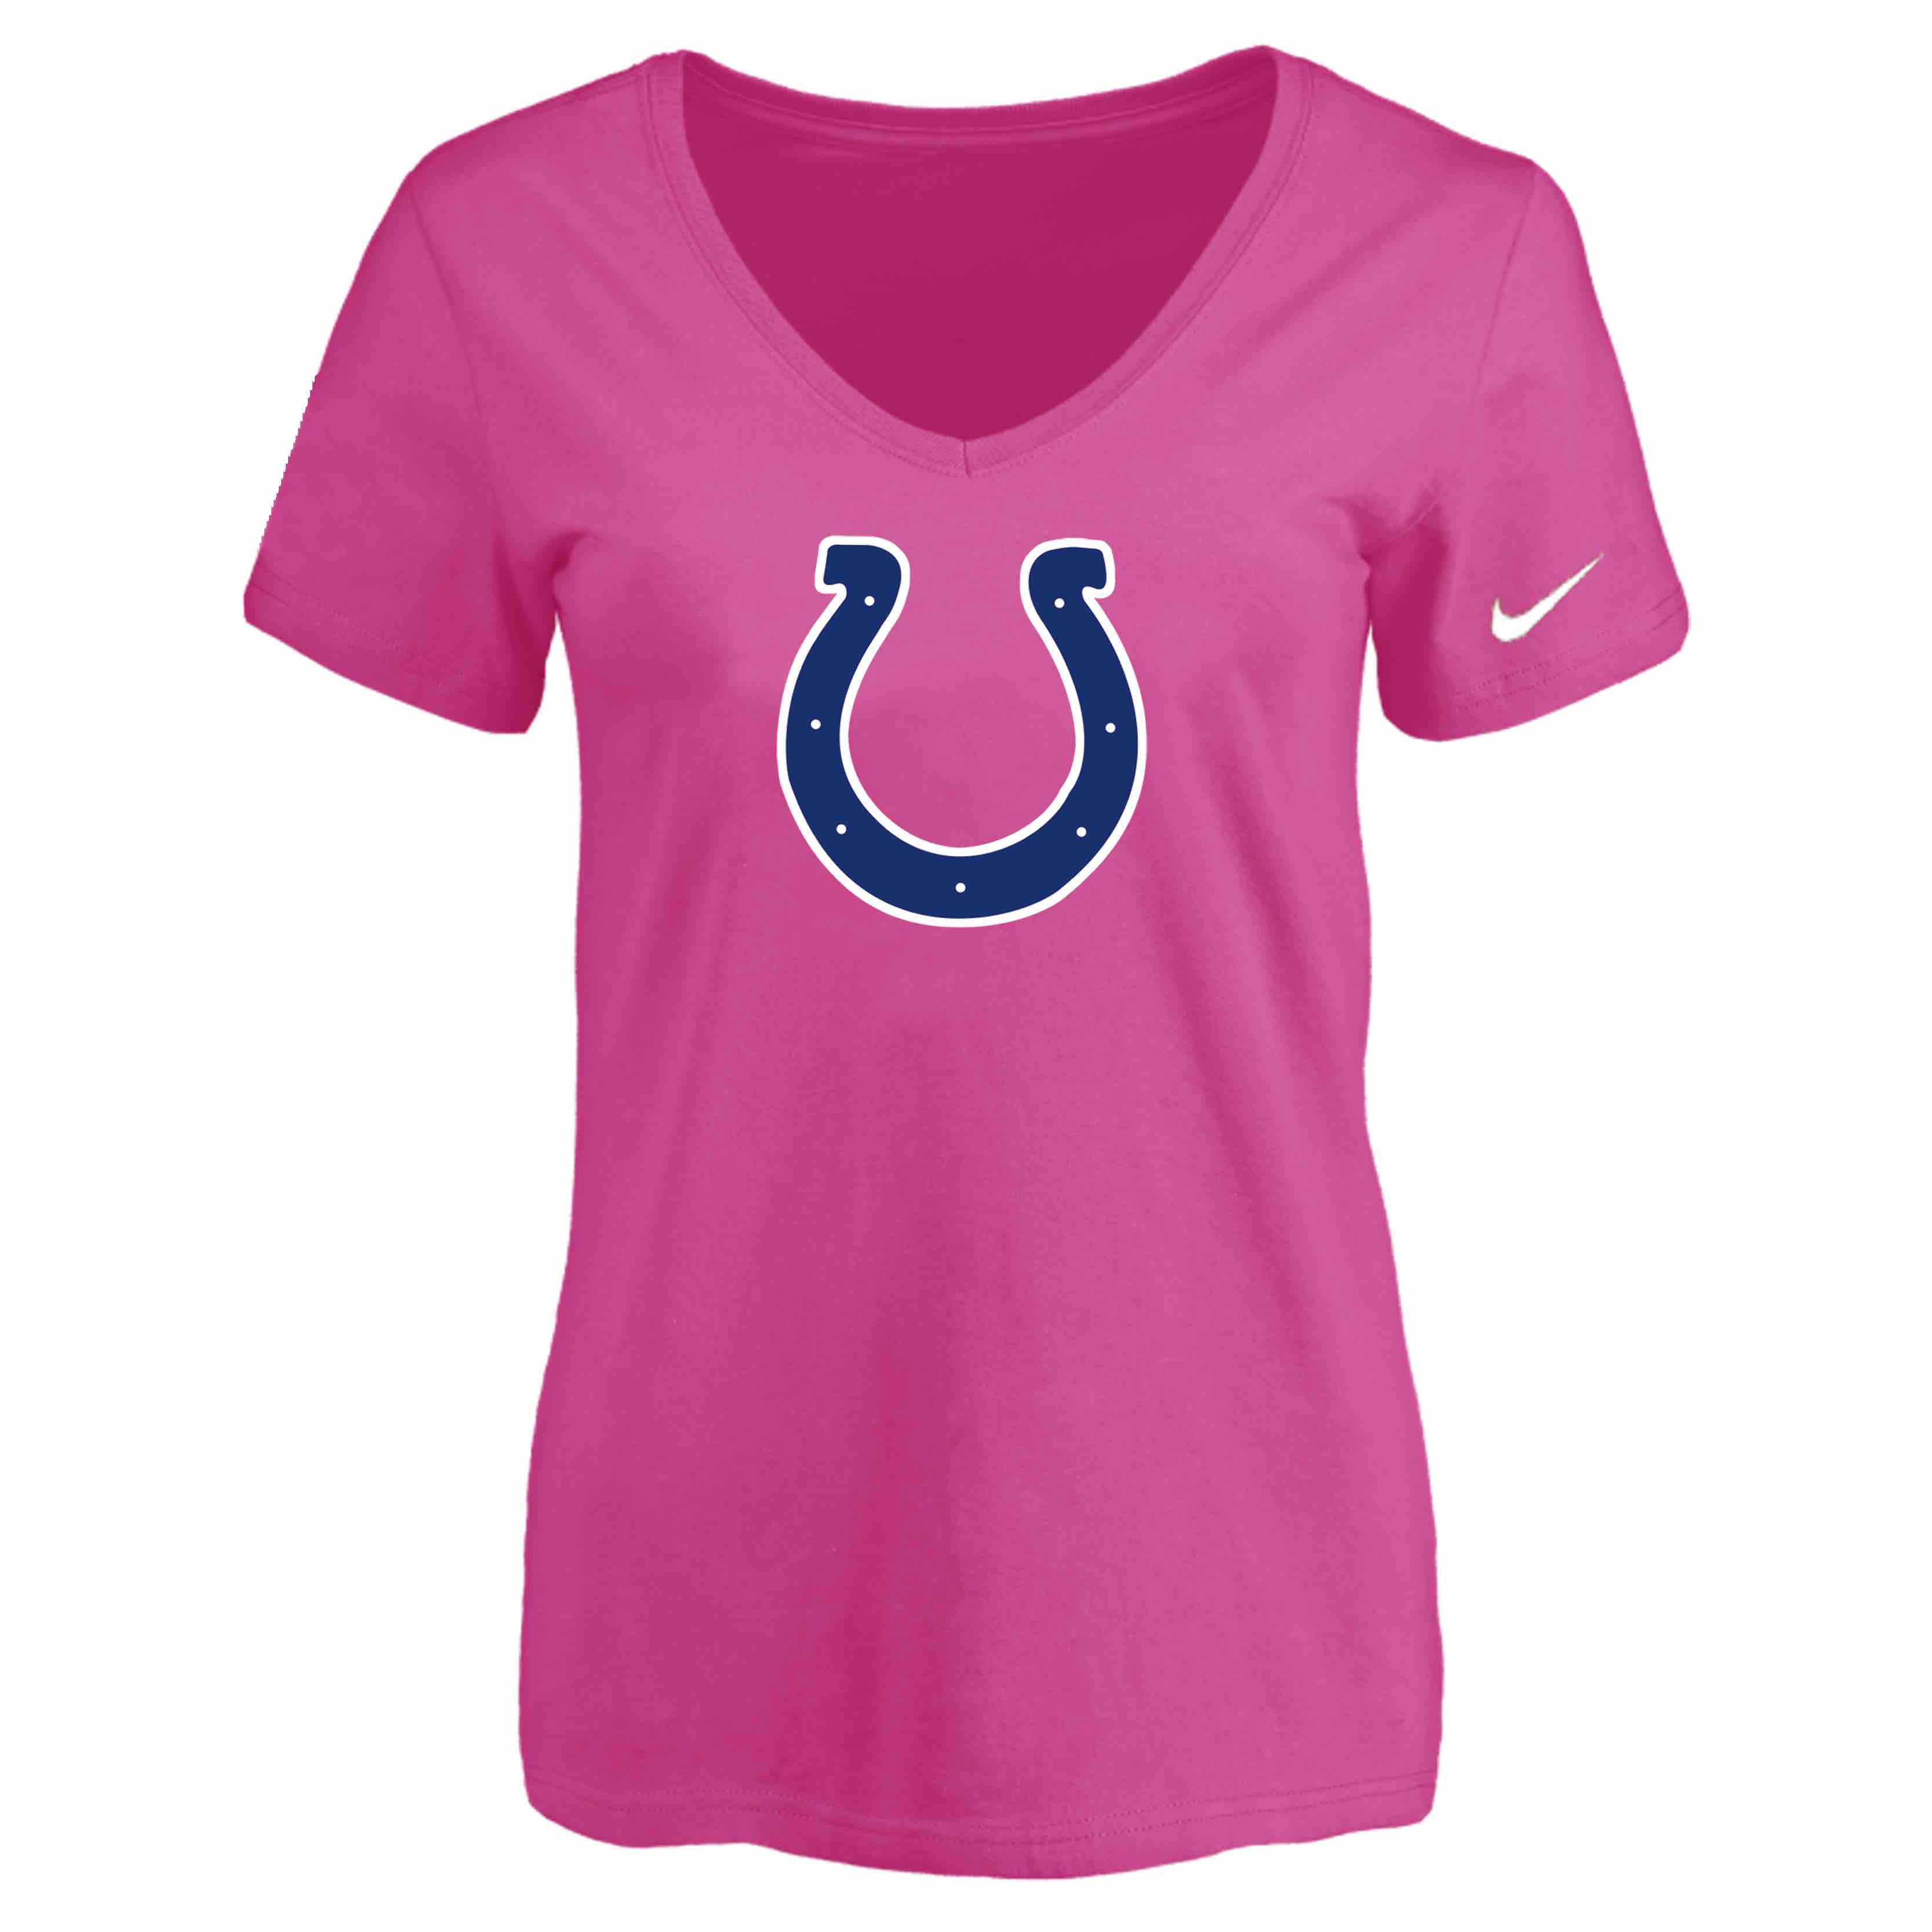 Indiannapolis Colts Peach Womens Logo V-neck T-Shirt